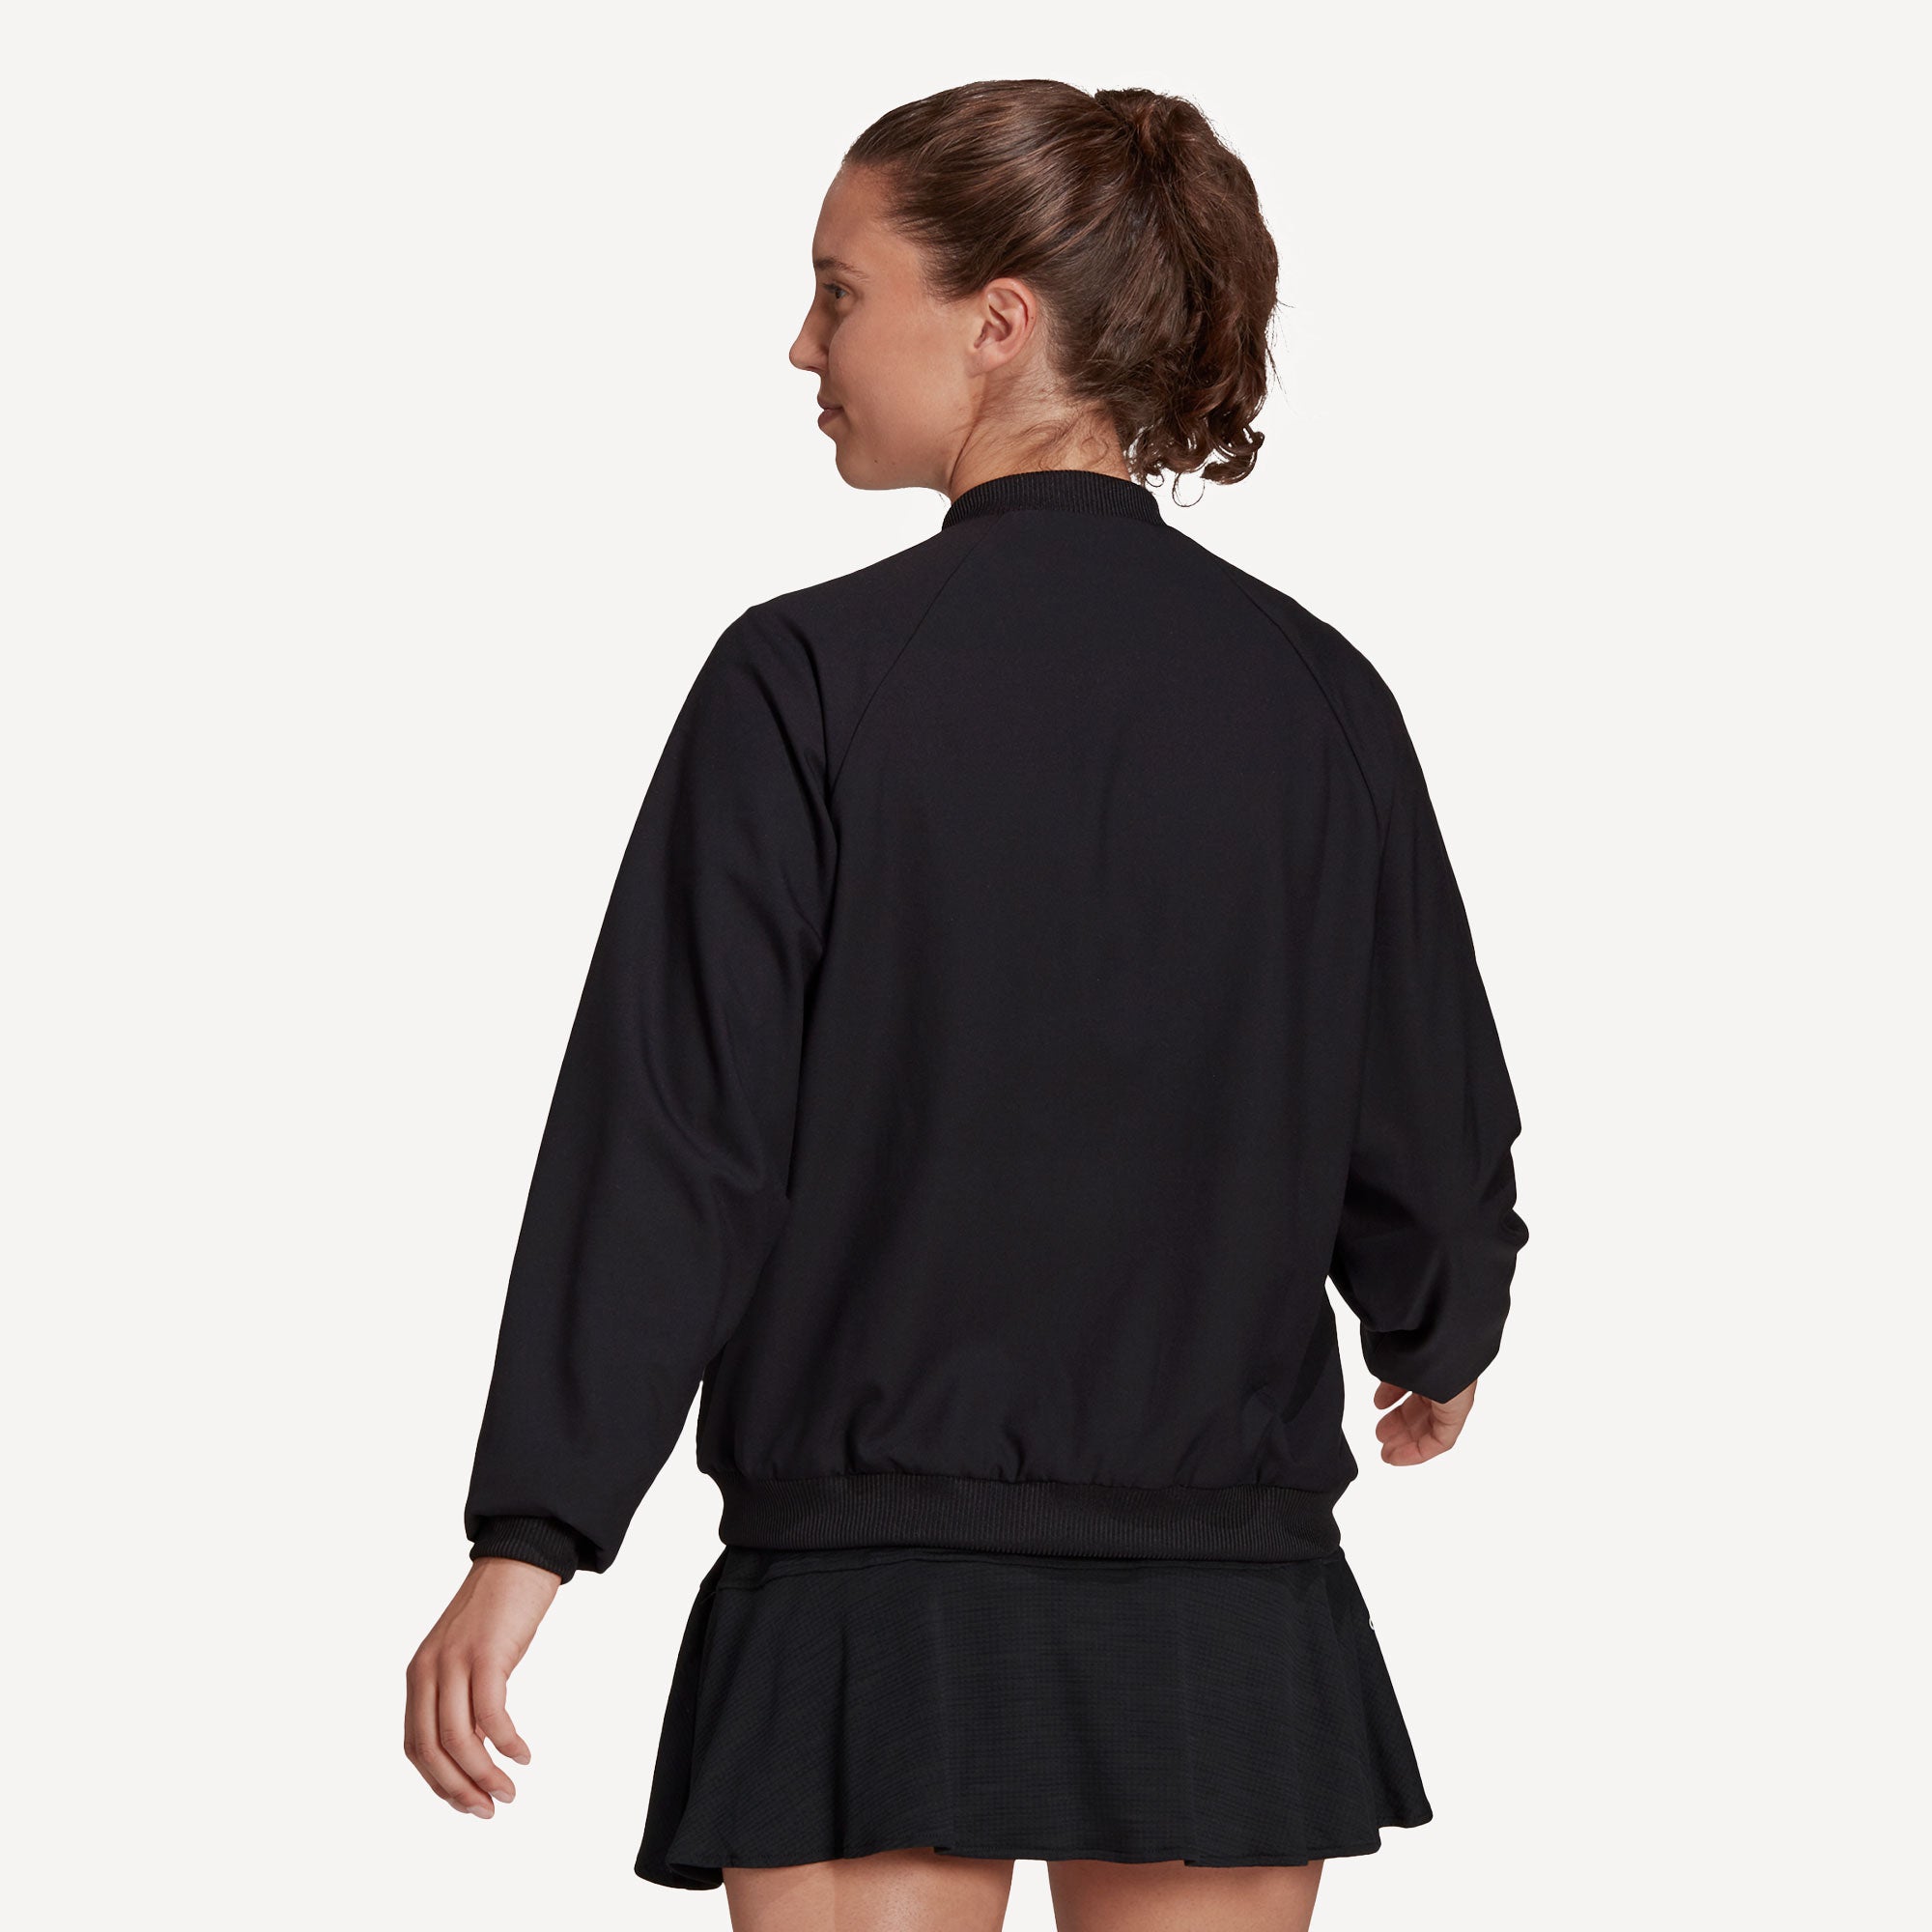 adidas Woven Women's Tennis Jacket Black (2)